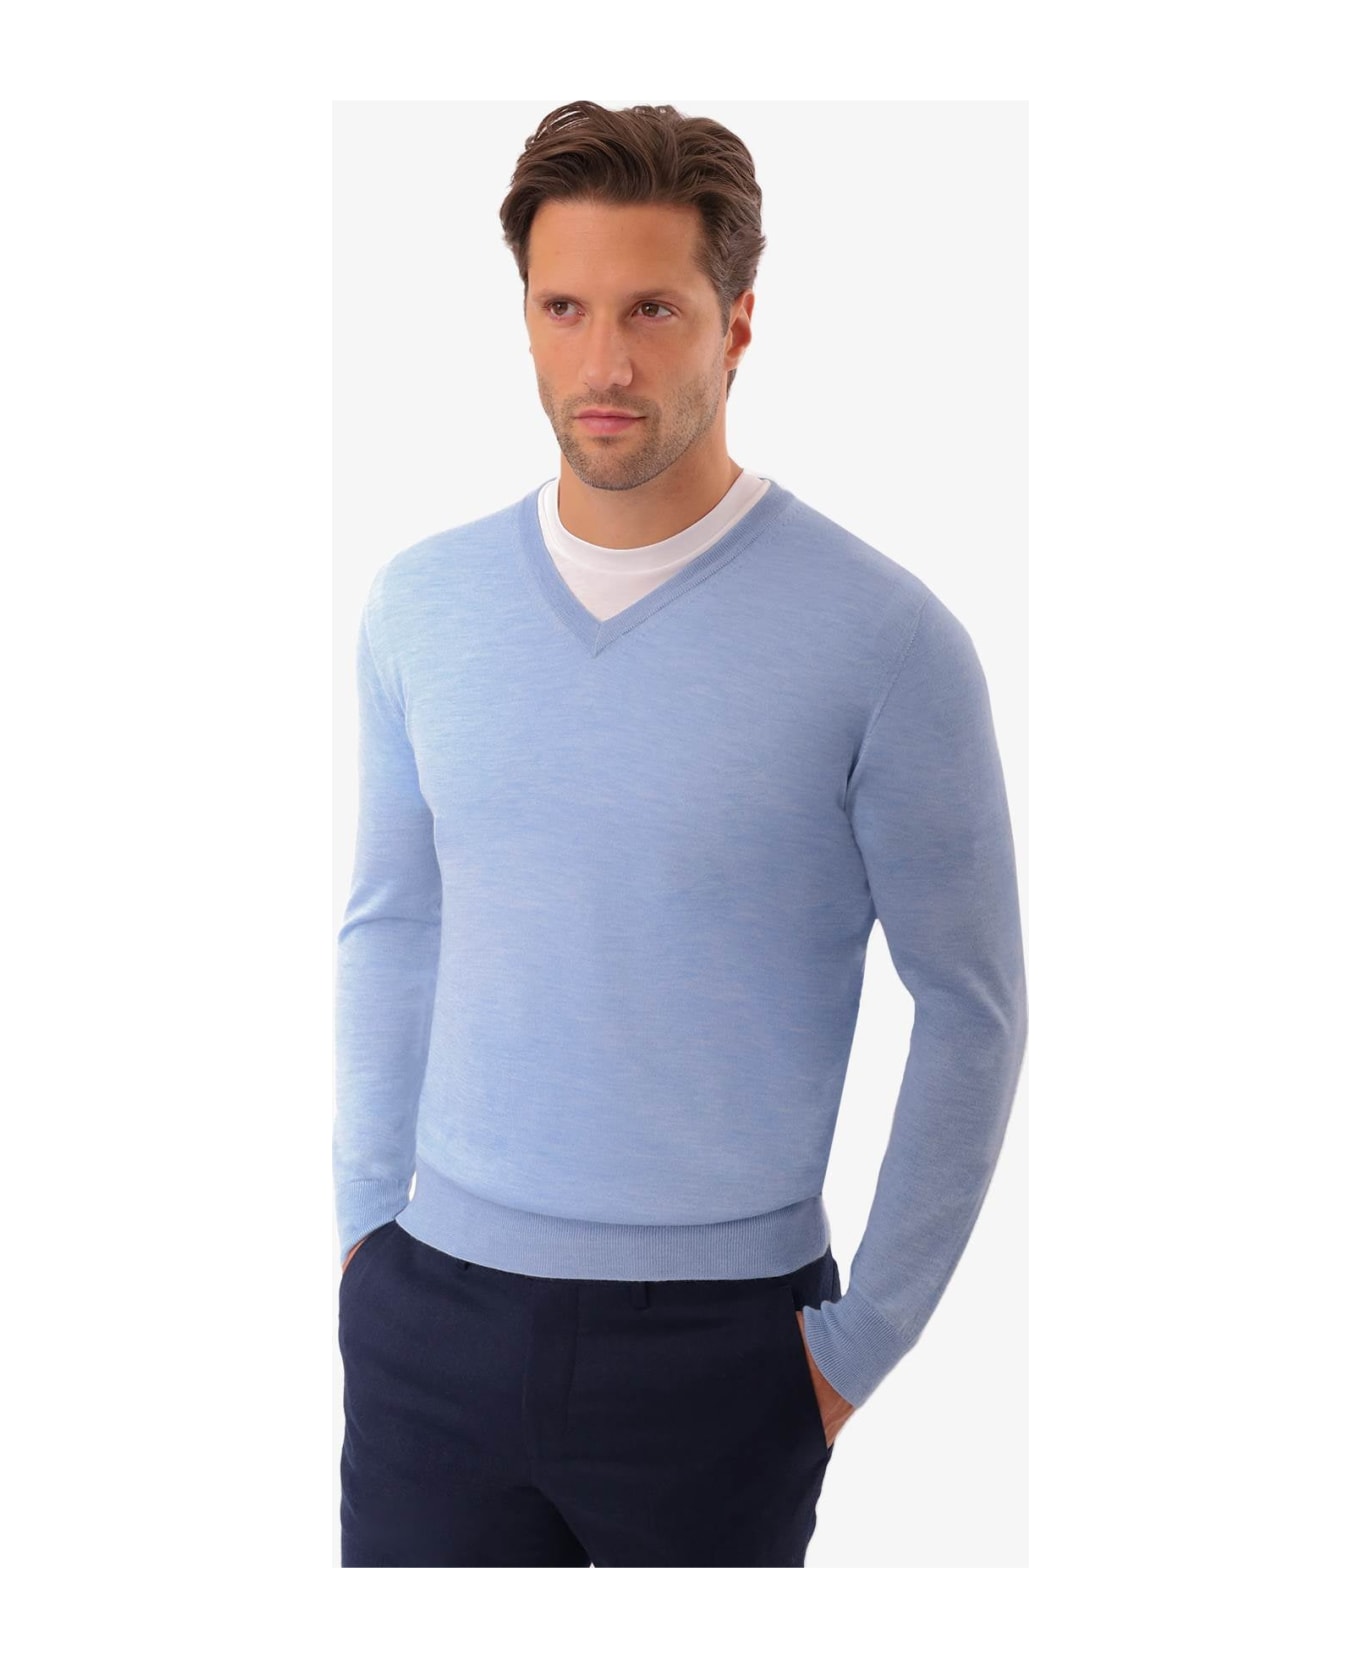 Larusmiani V-neck Sweater 'pullman' Sweater - LightBlue